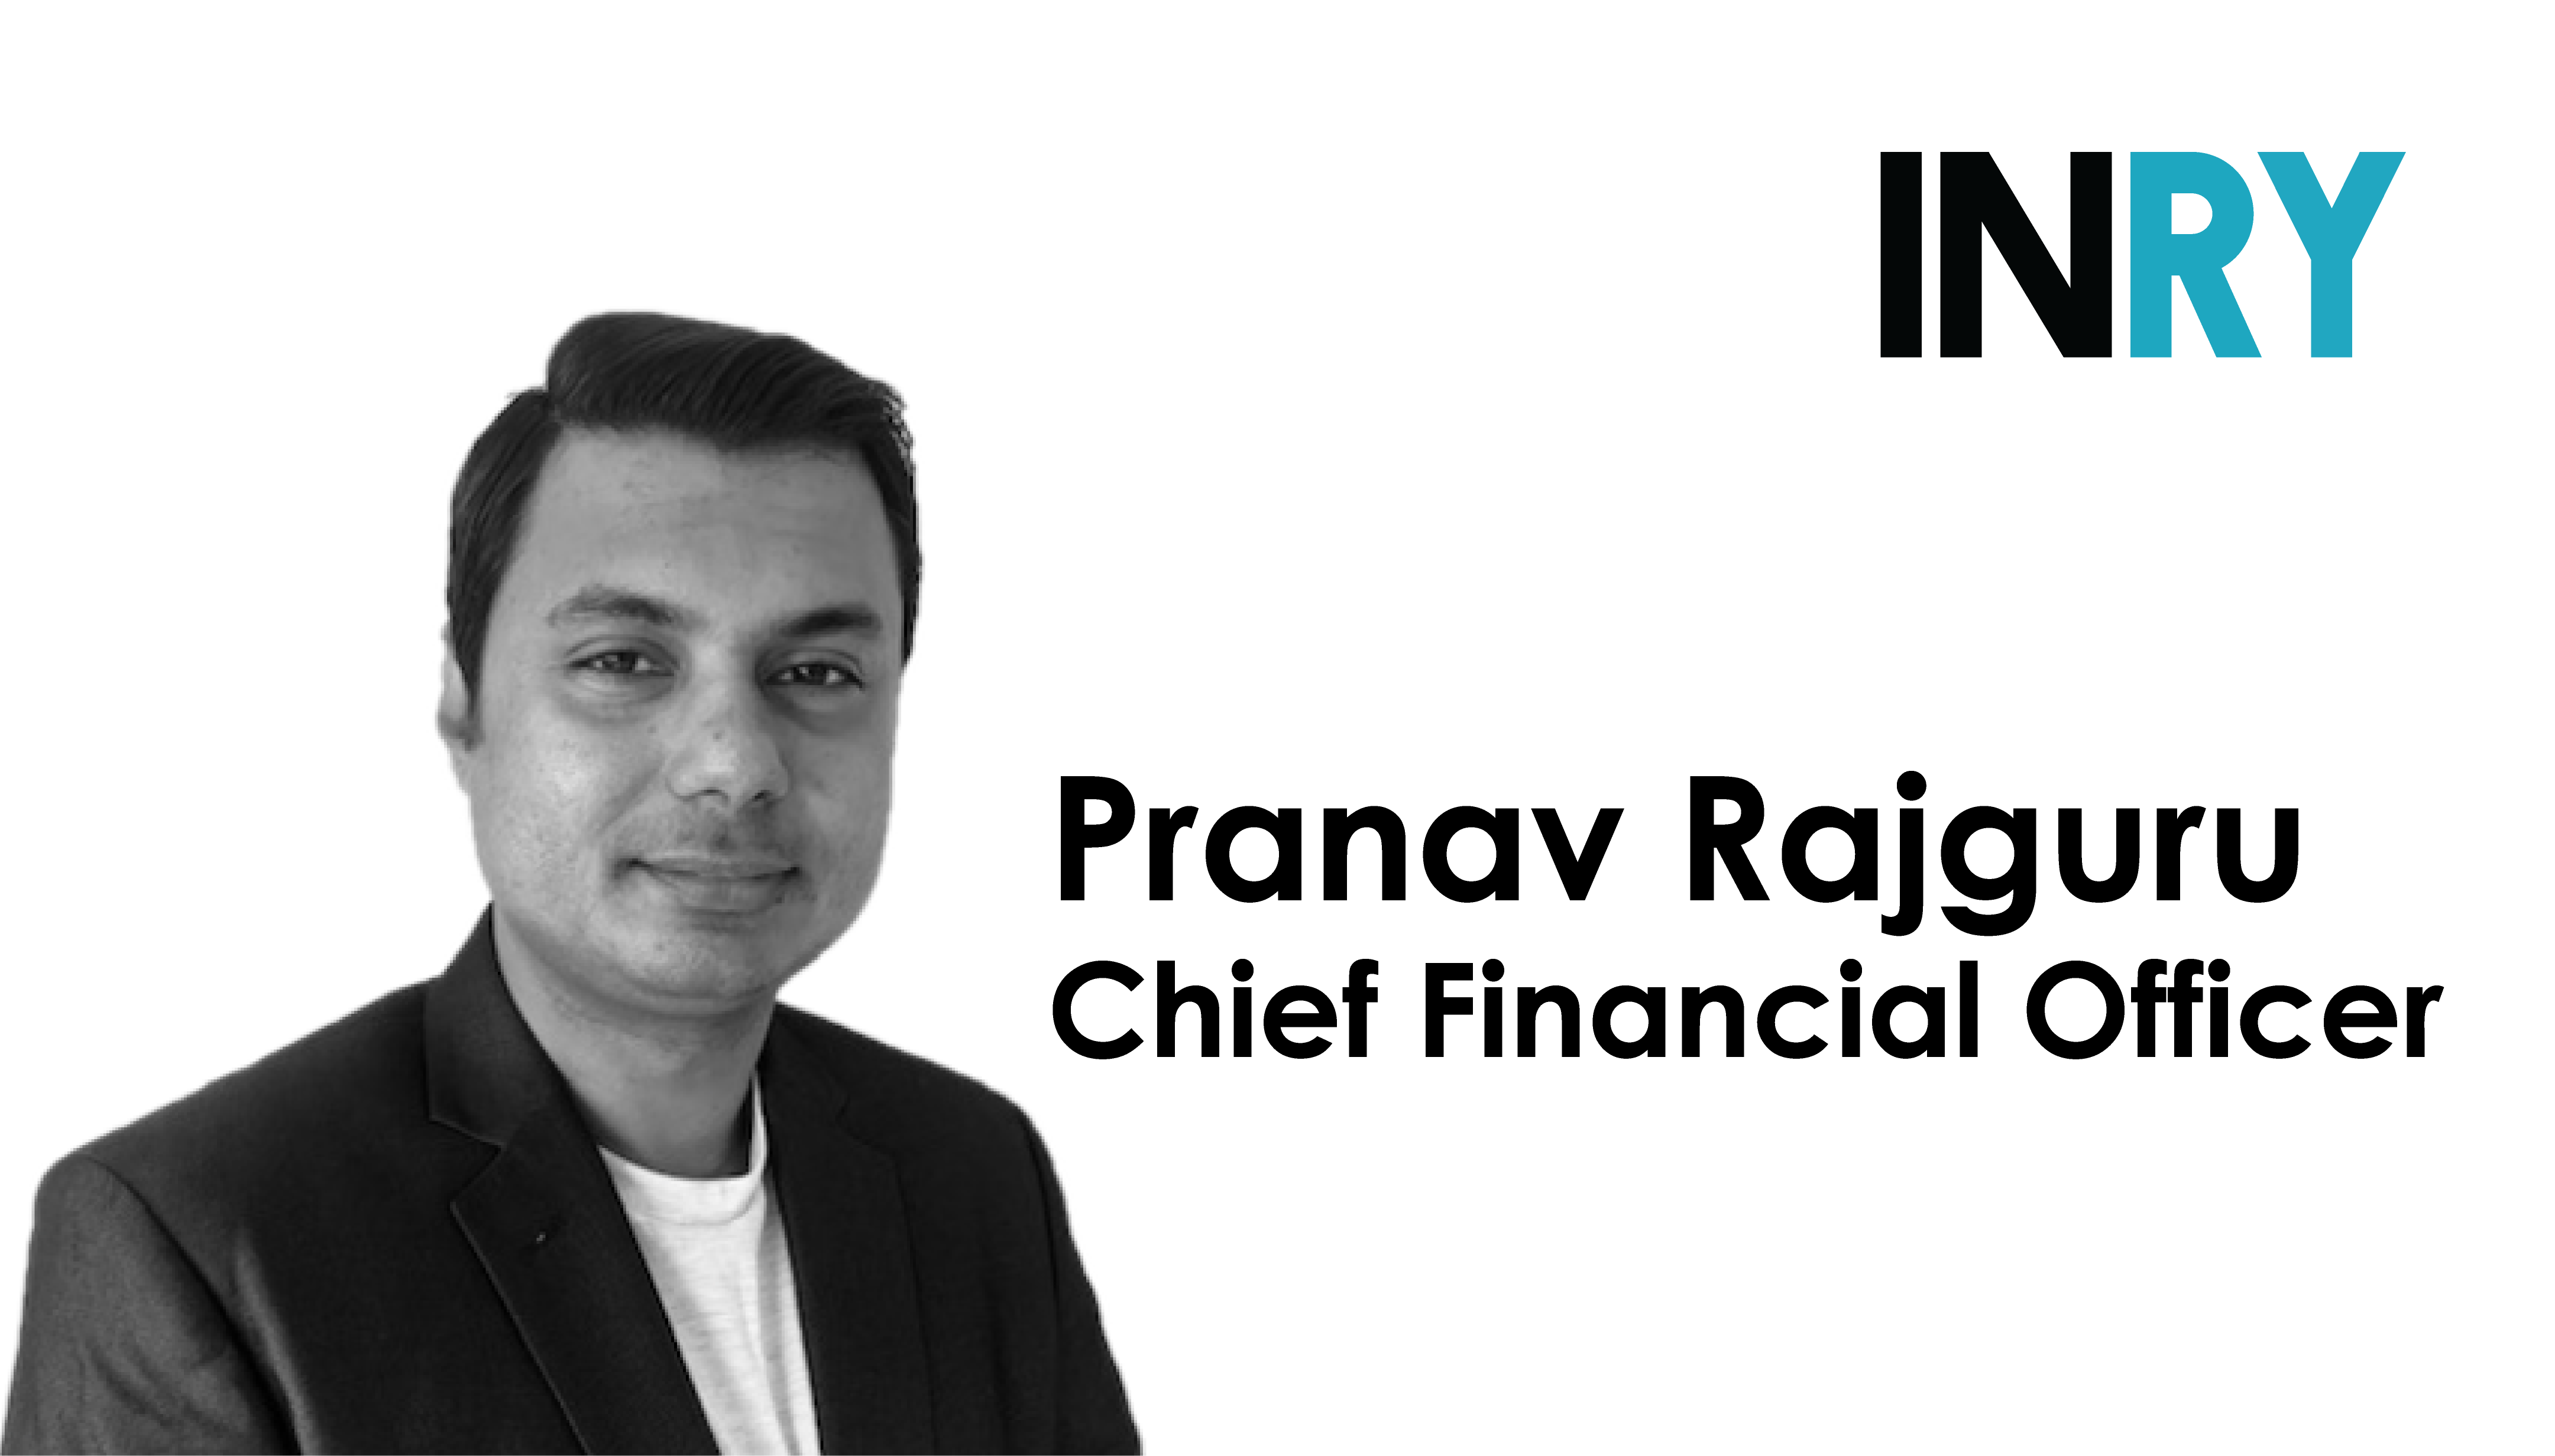 Pranav Rajguru is INRY's New CFO as Company’s Growth Journey Continues